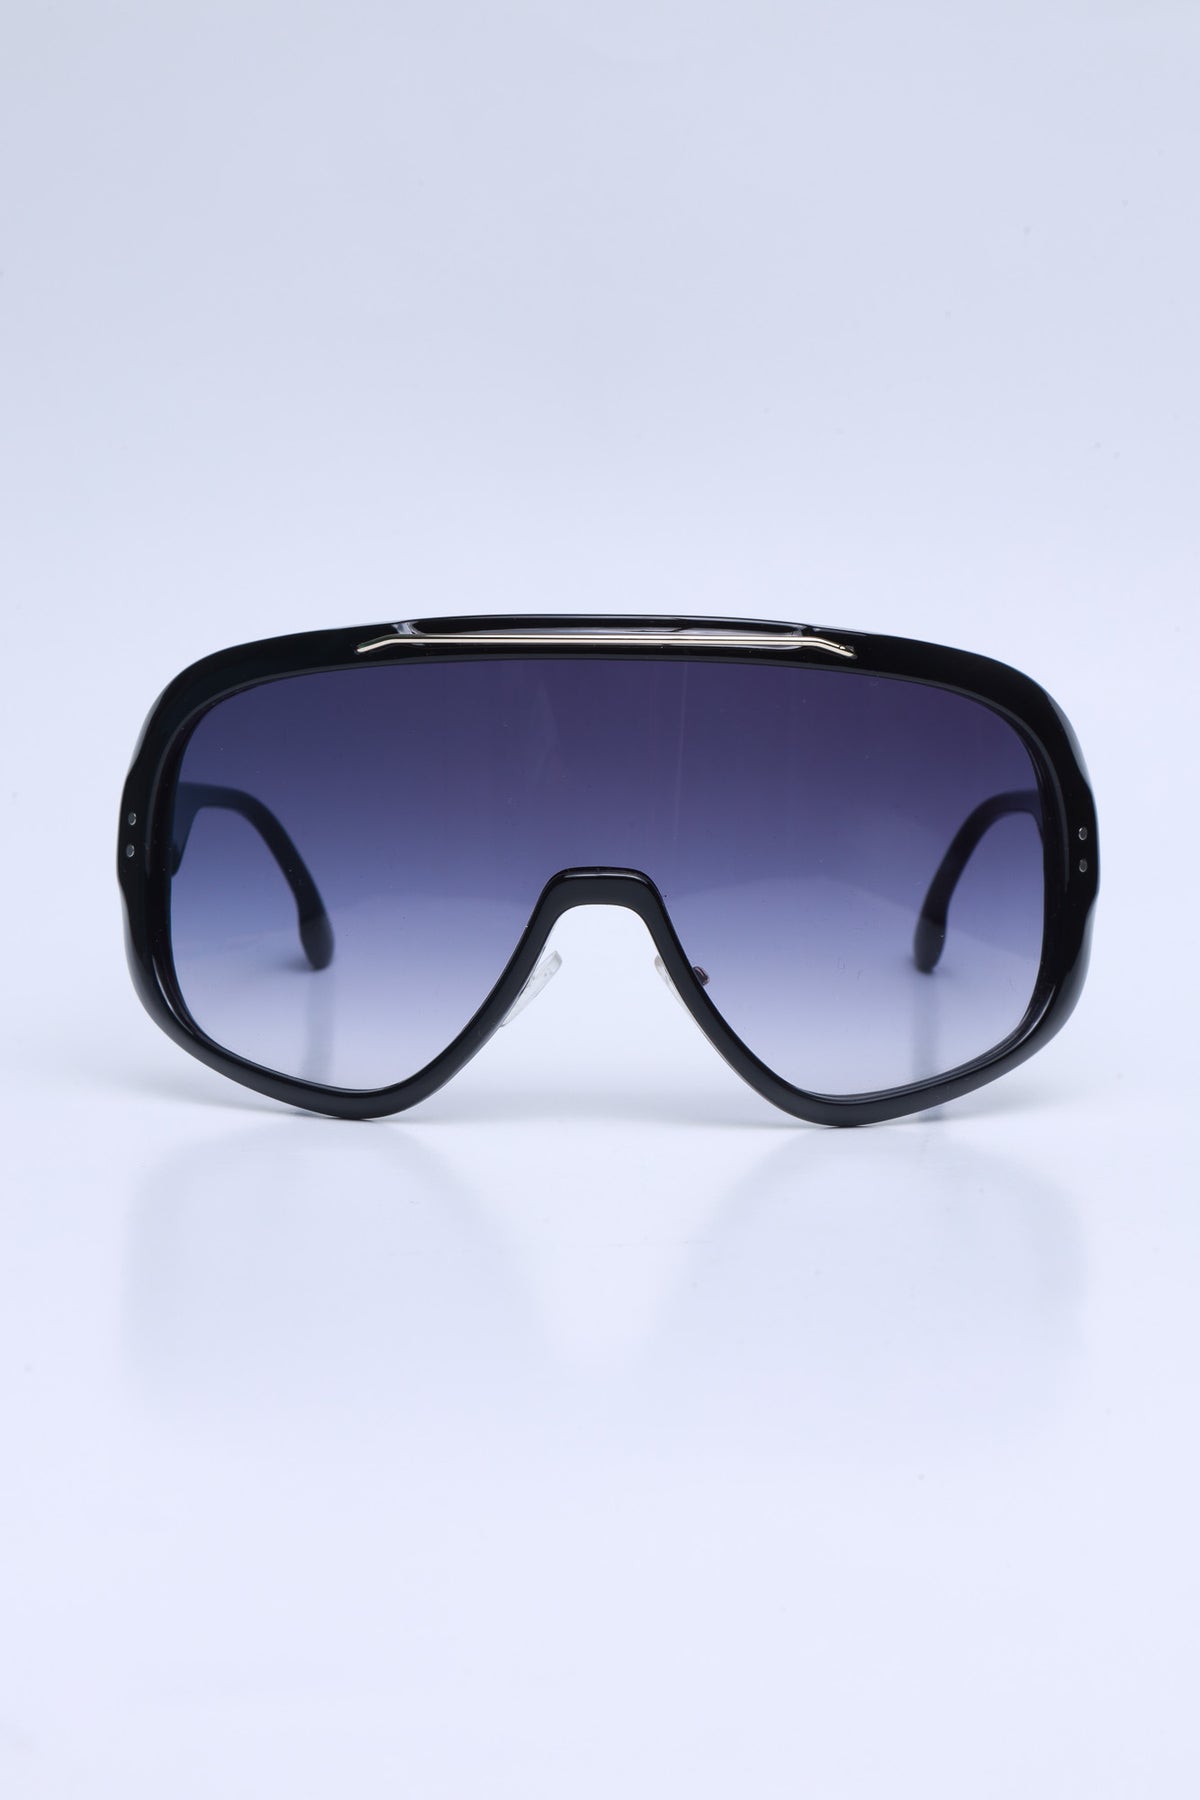 
              Undercover Curved Shield Sunglasses - Black/Black - Swank A Posh
            